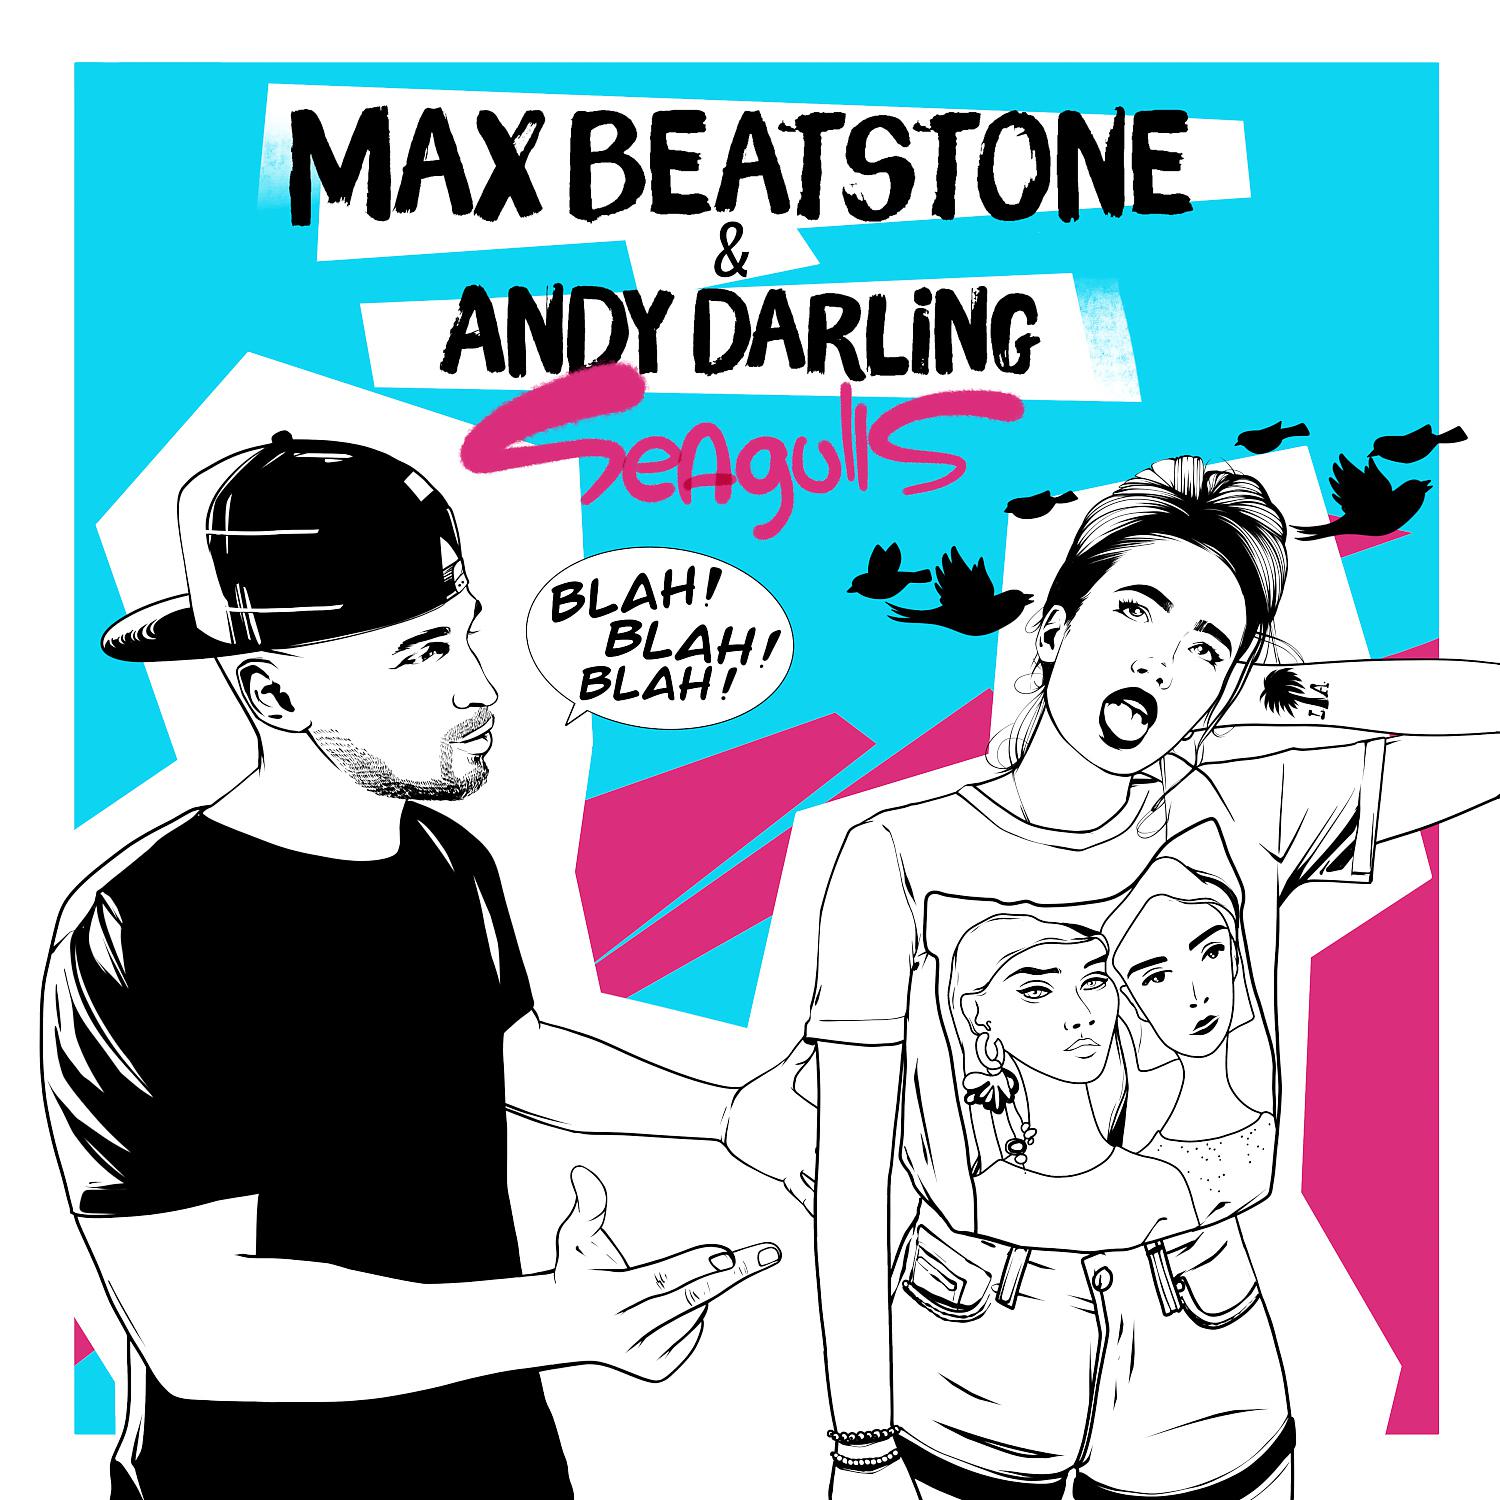 Max Beatstone, Andy Darling - Seagulls